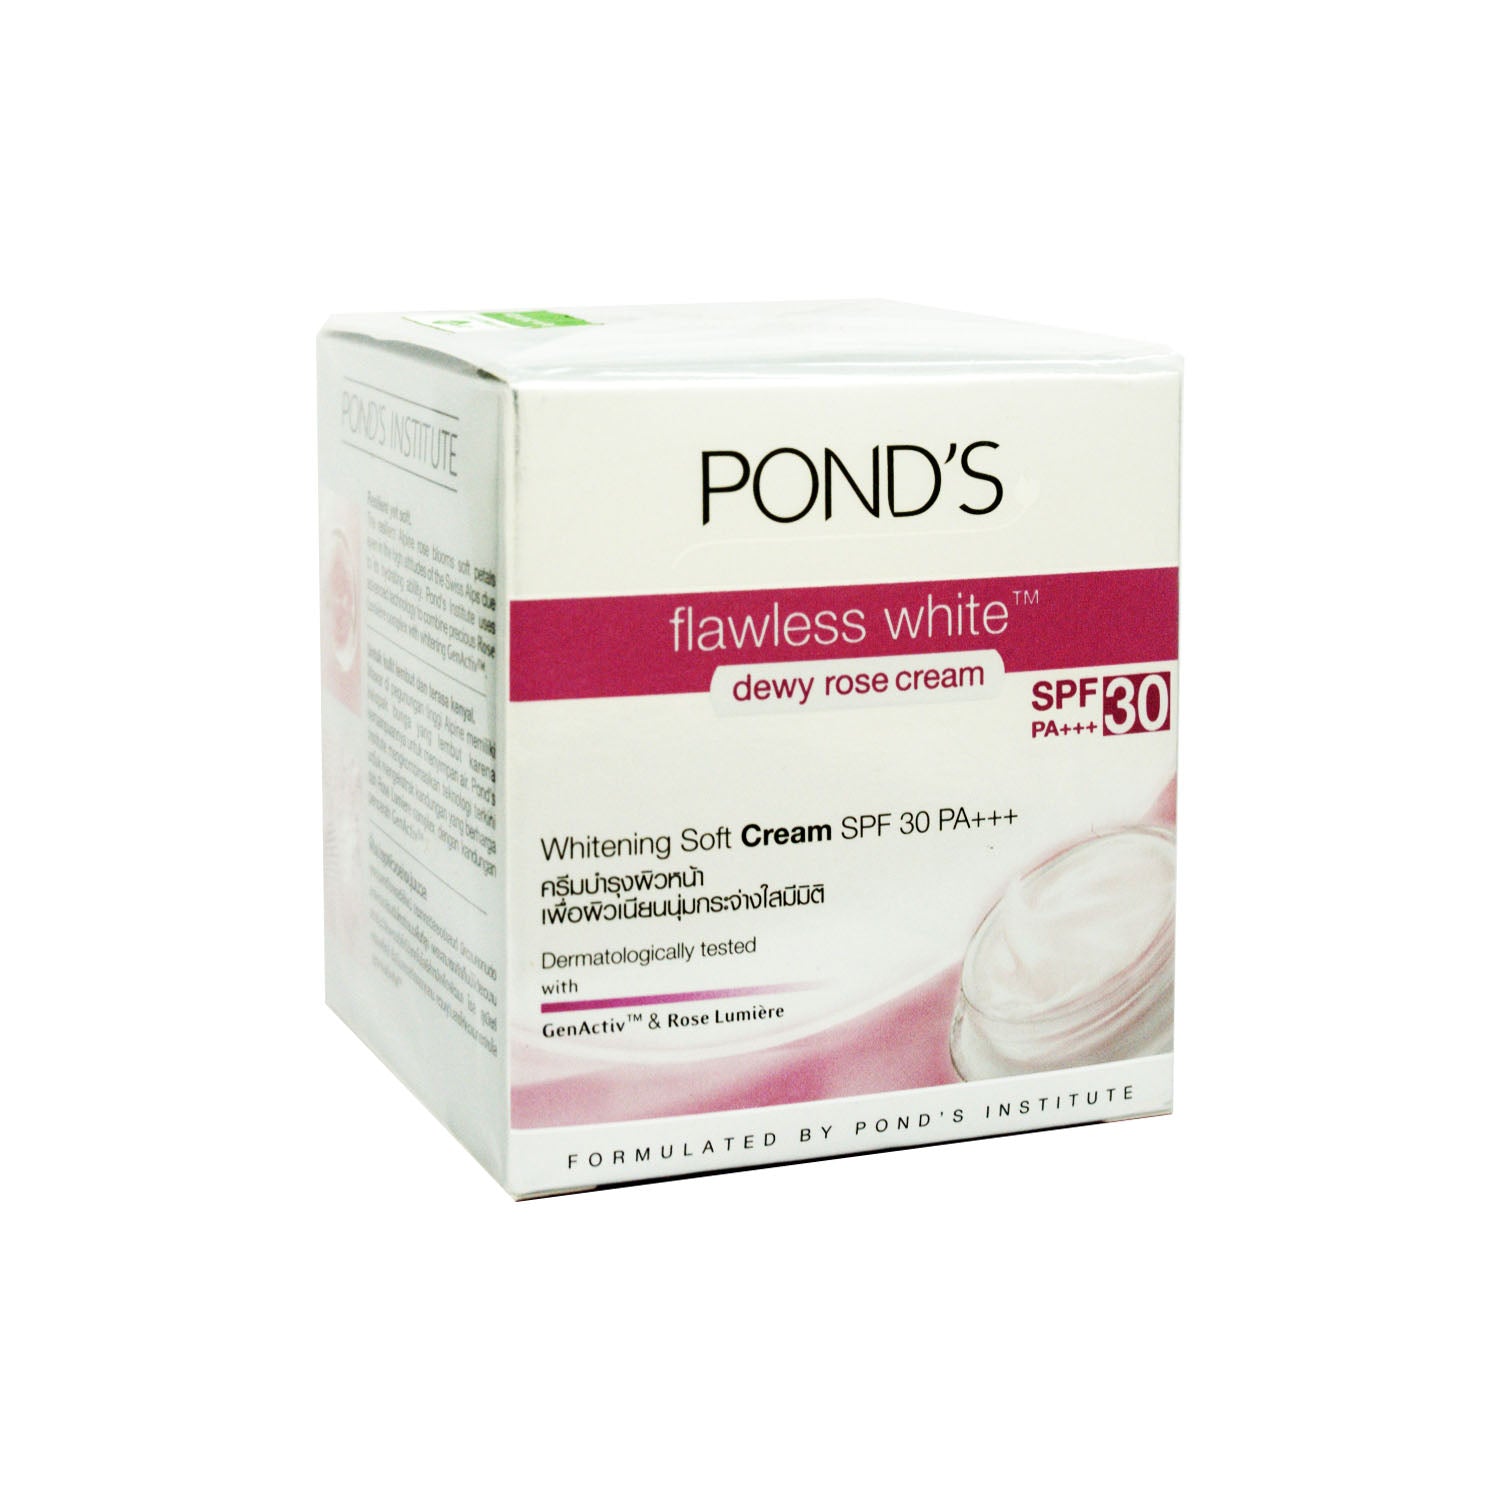 Pond's, Flawless White Dewy Rose Cream SPF30, 50 g